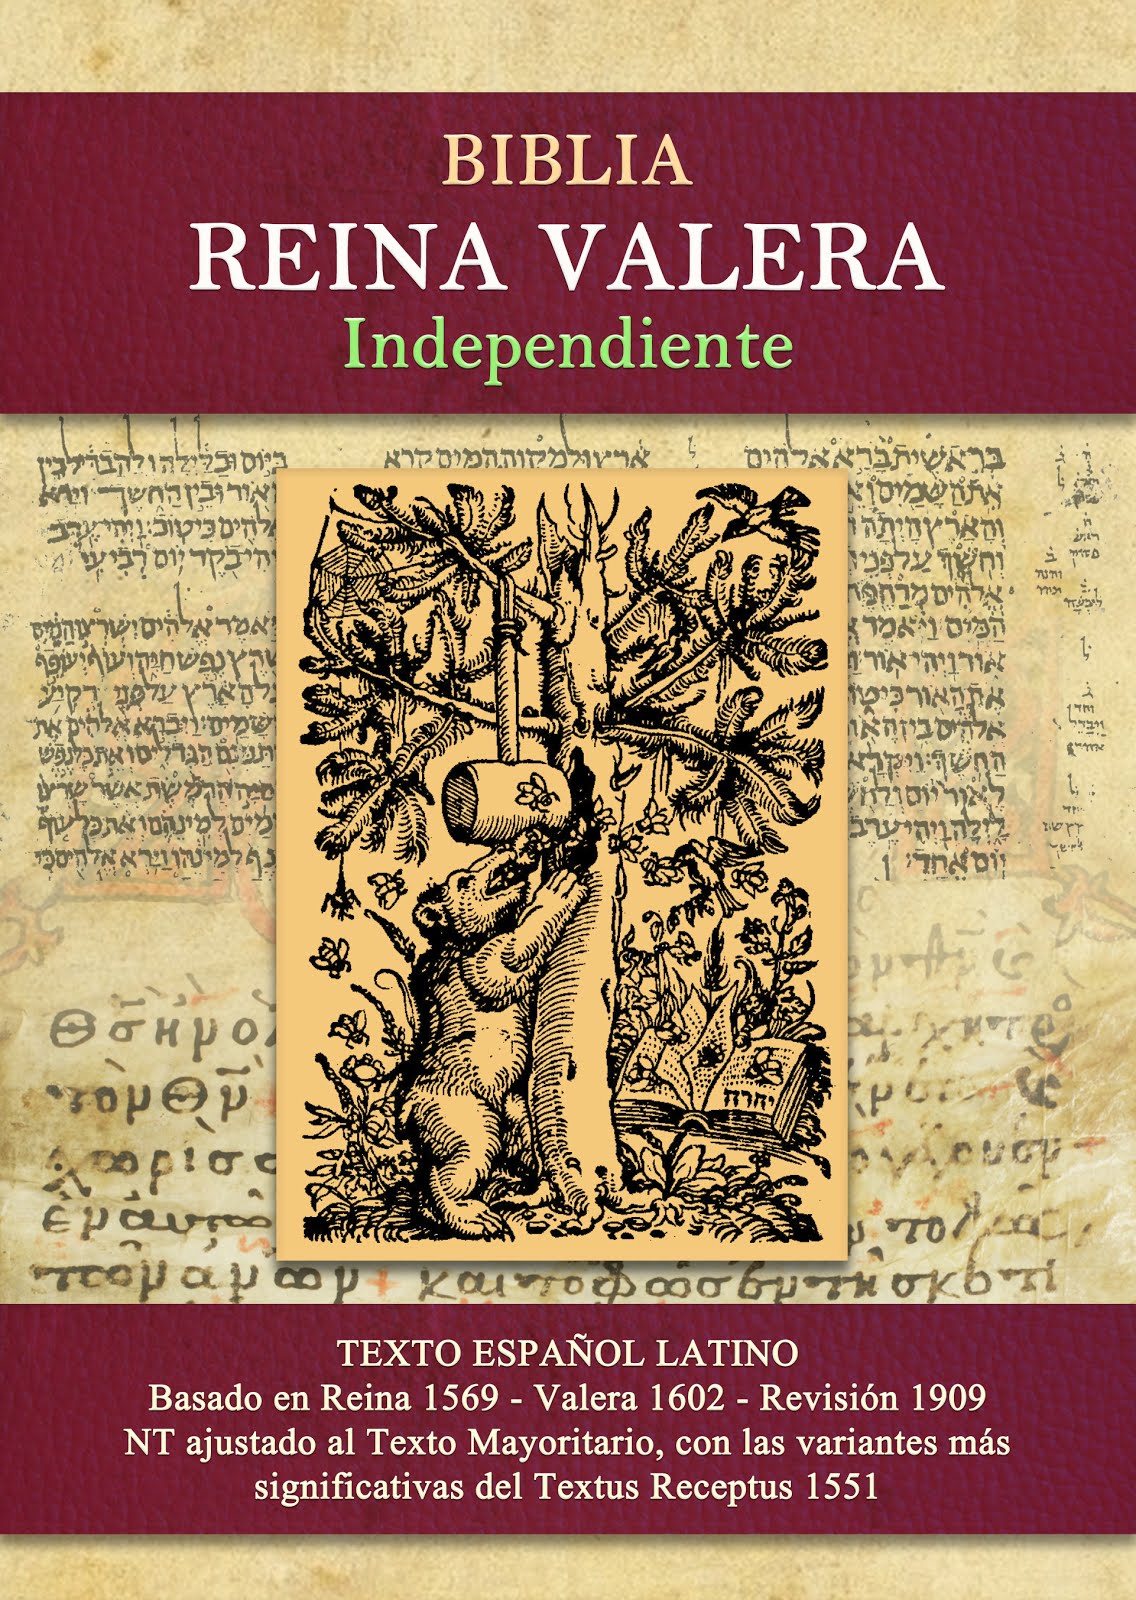 REINA VALERA 2012 EN PDF